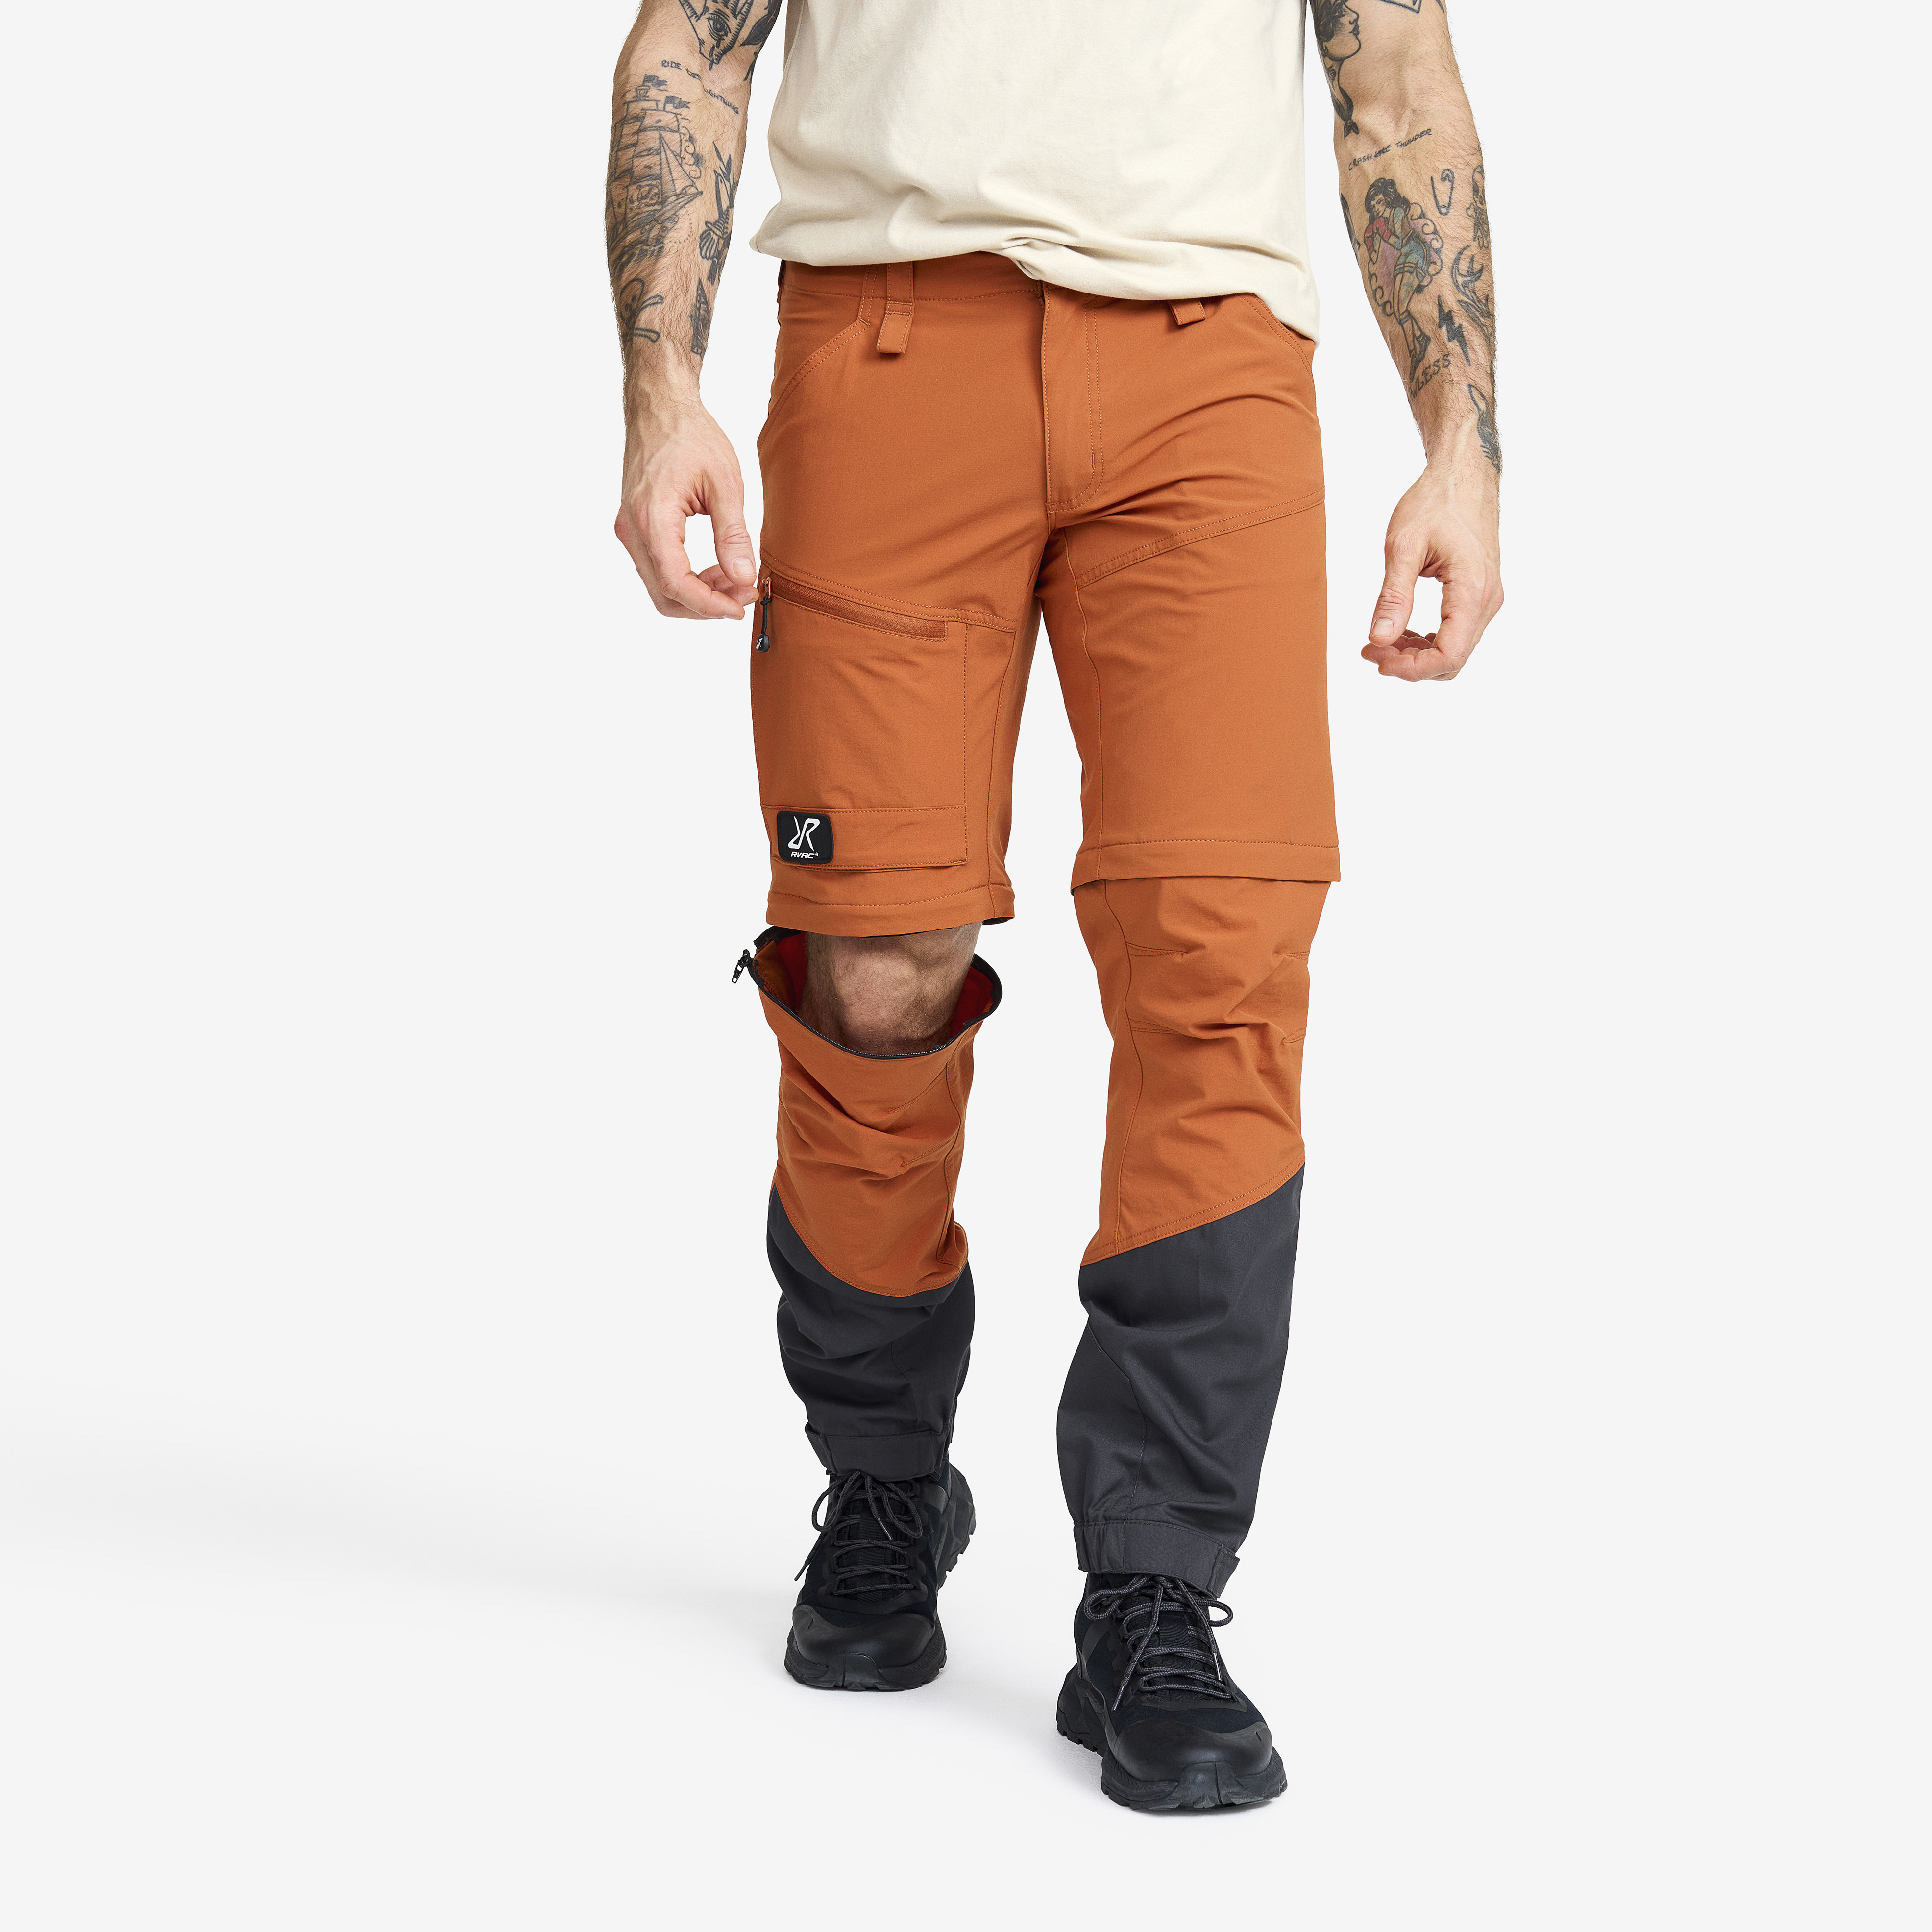 Range Pro Zip-off Pants Teracotta Brown/Anthracite Męskie